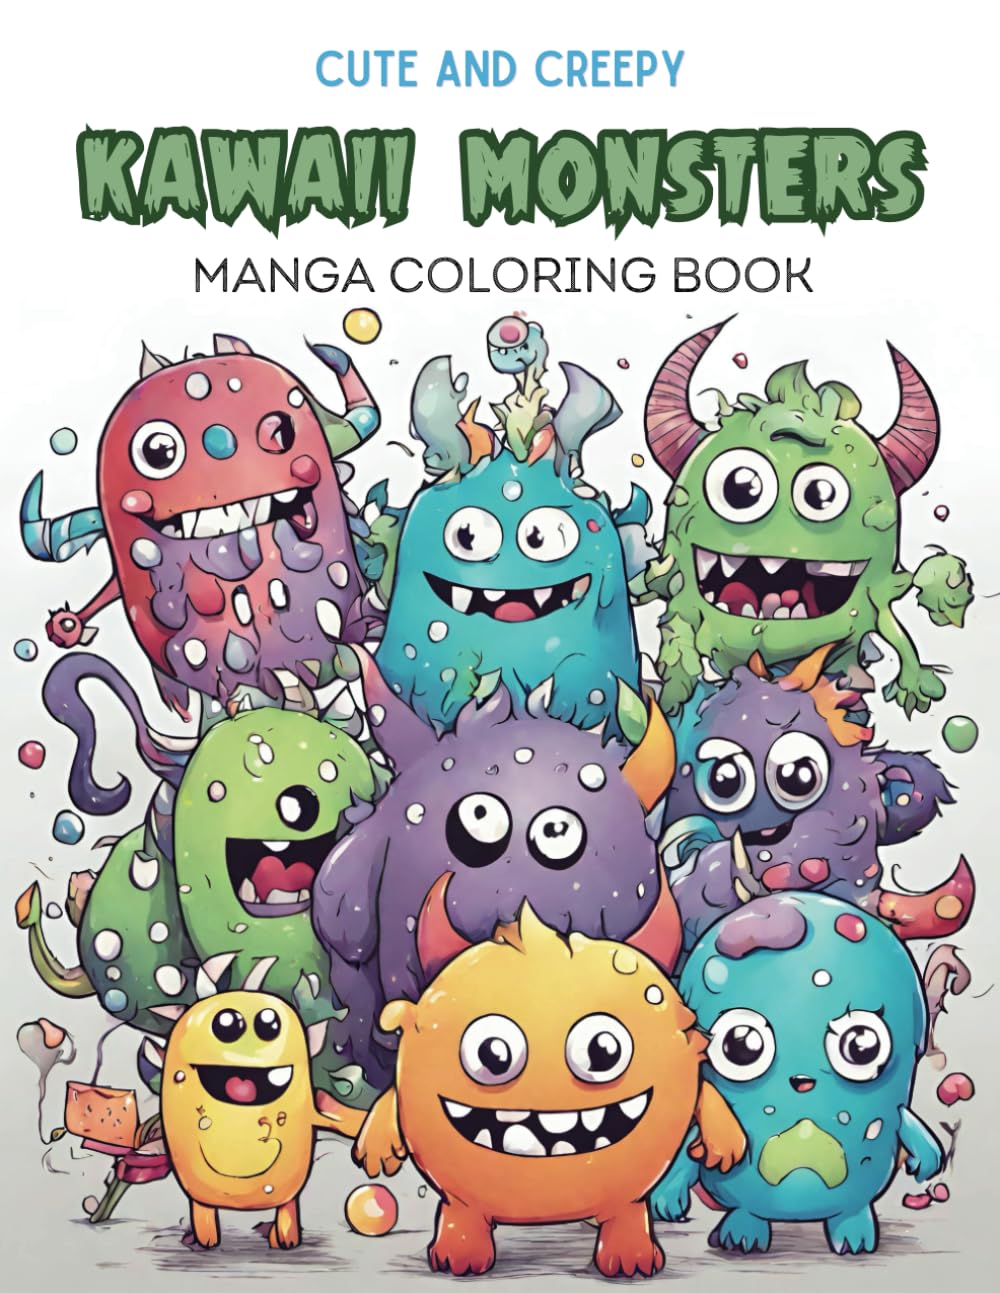 Creepy Kawaii Monsters: Coloring Book Manga Anime - Cute and Creepy Monsters: Pop Manga coloring Book for Adult Children Student Kid (Italian Edition)